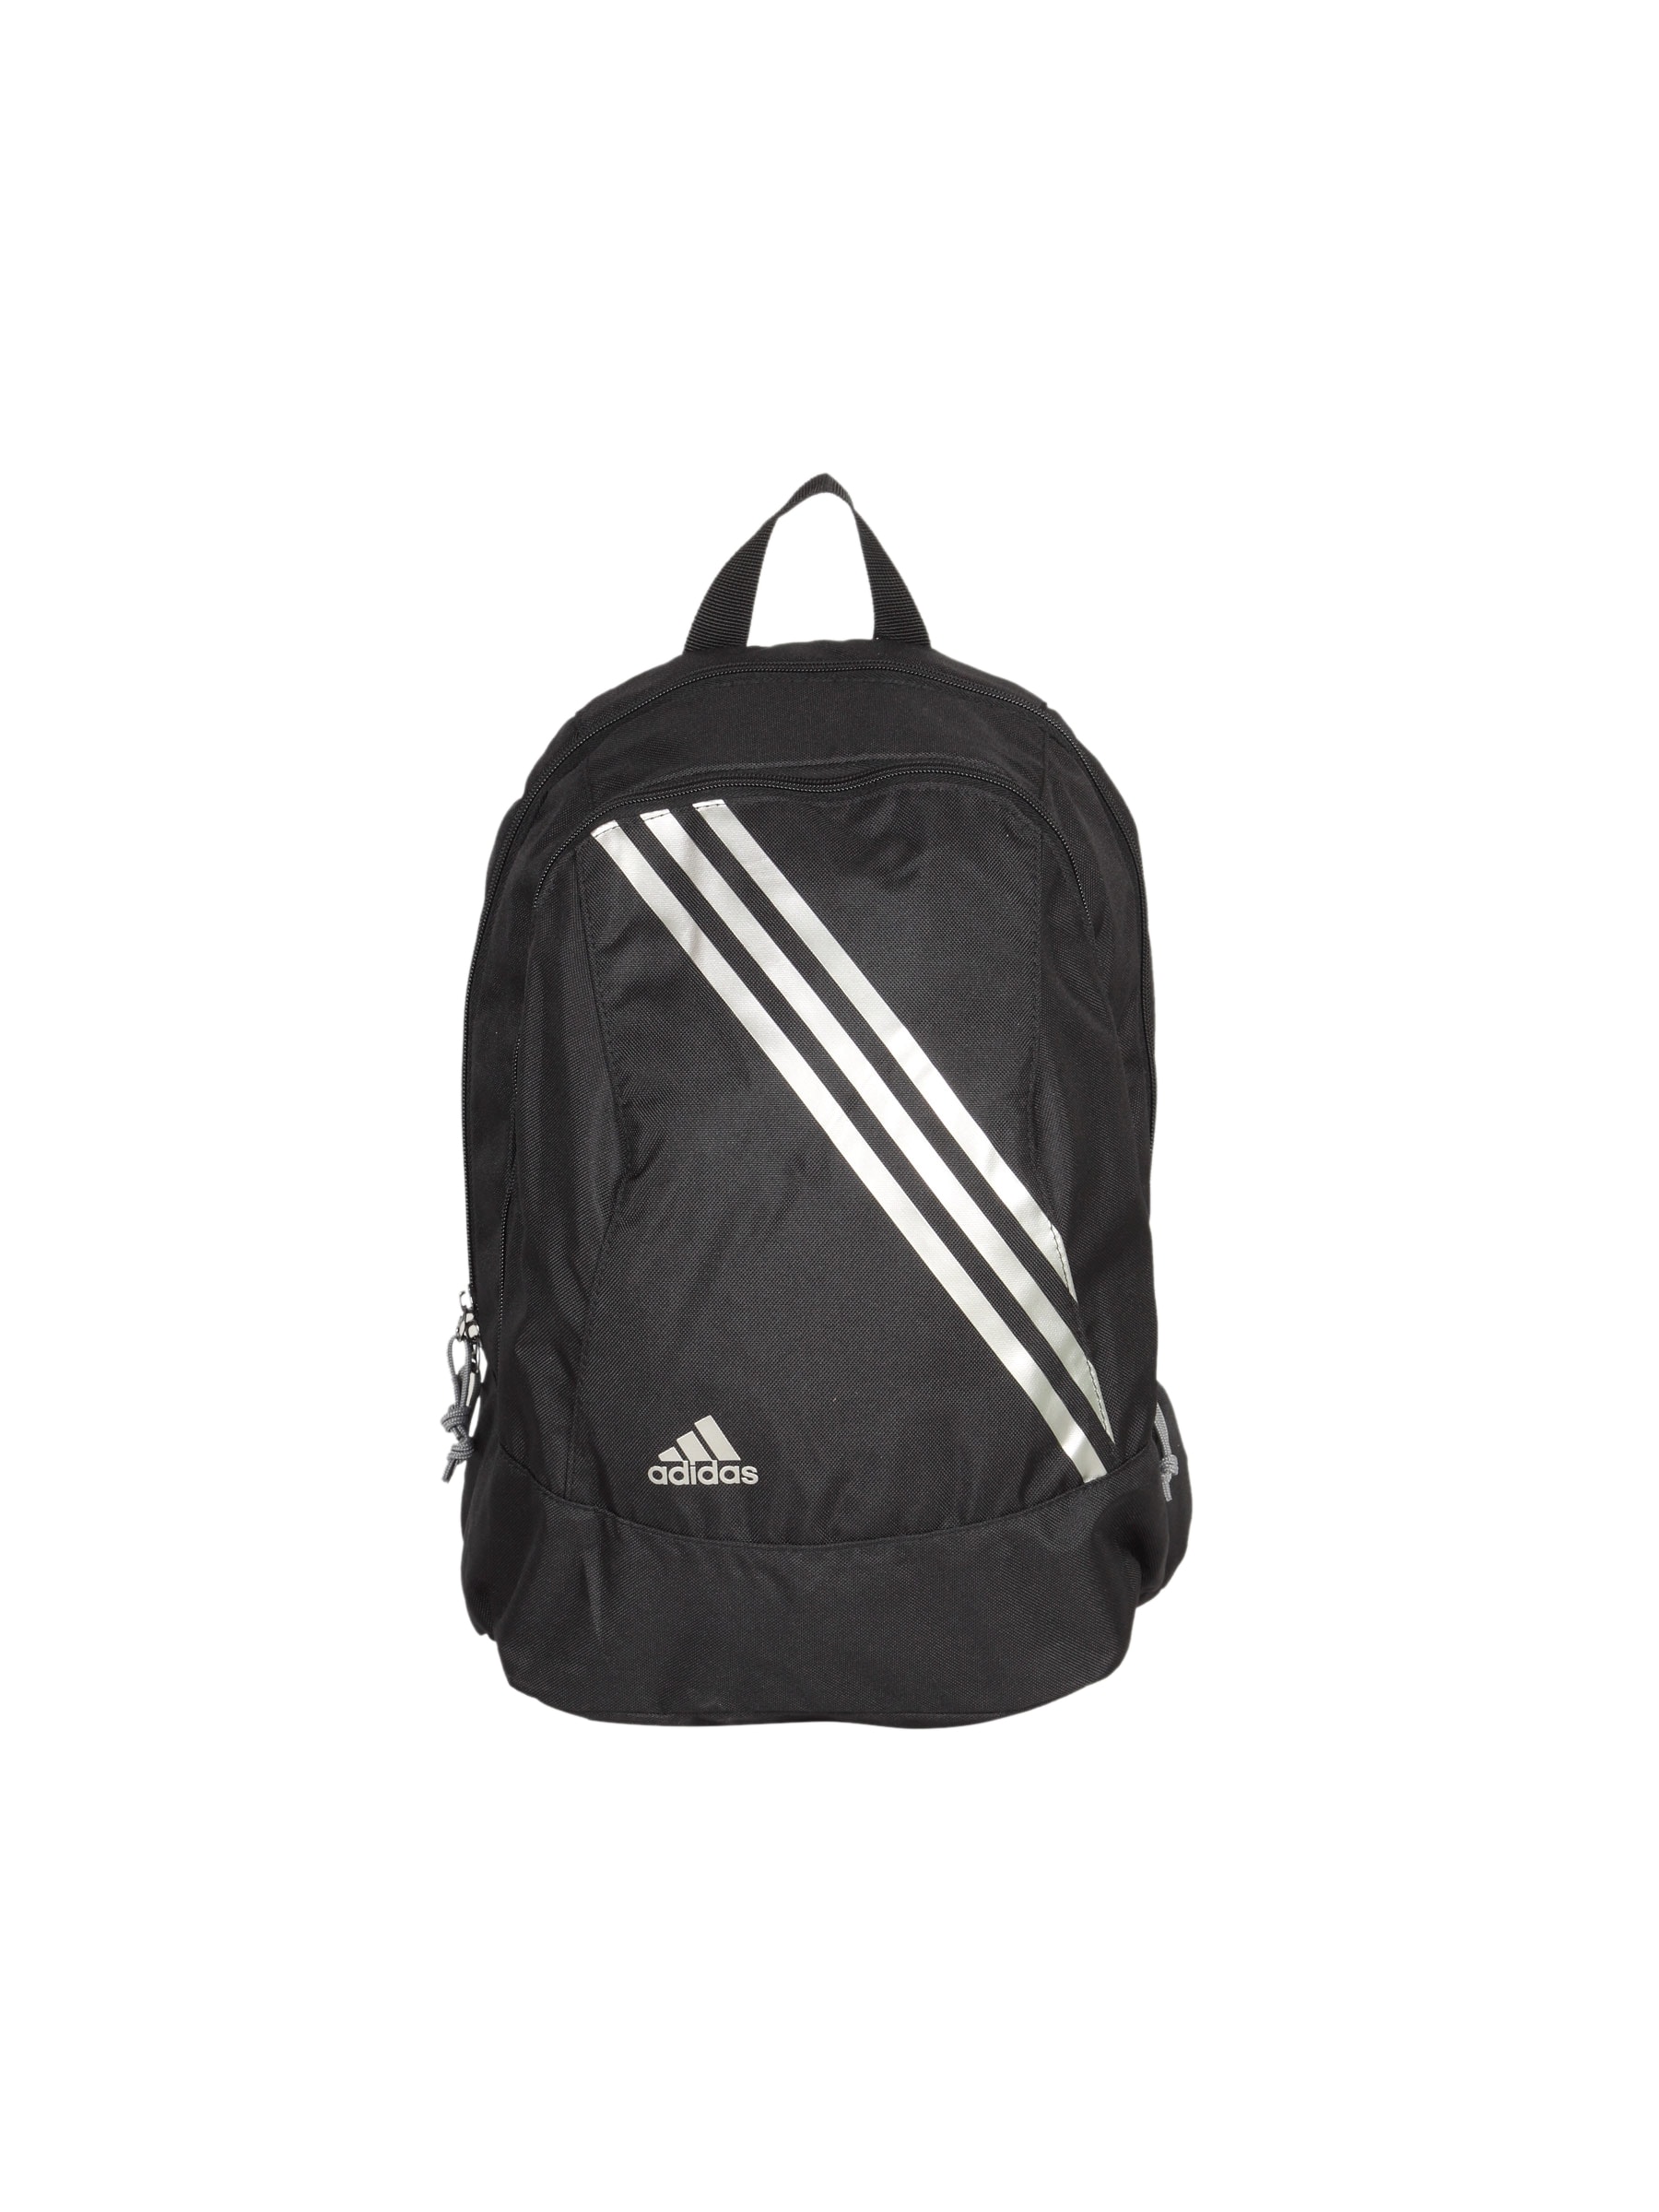 ADIDAS CR_BTS 3S INSP Black Silver Unisex Backpack